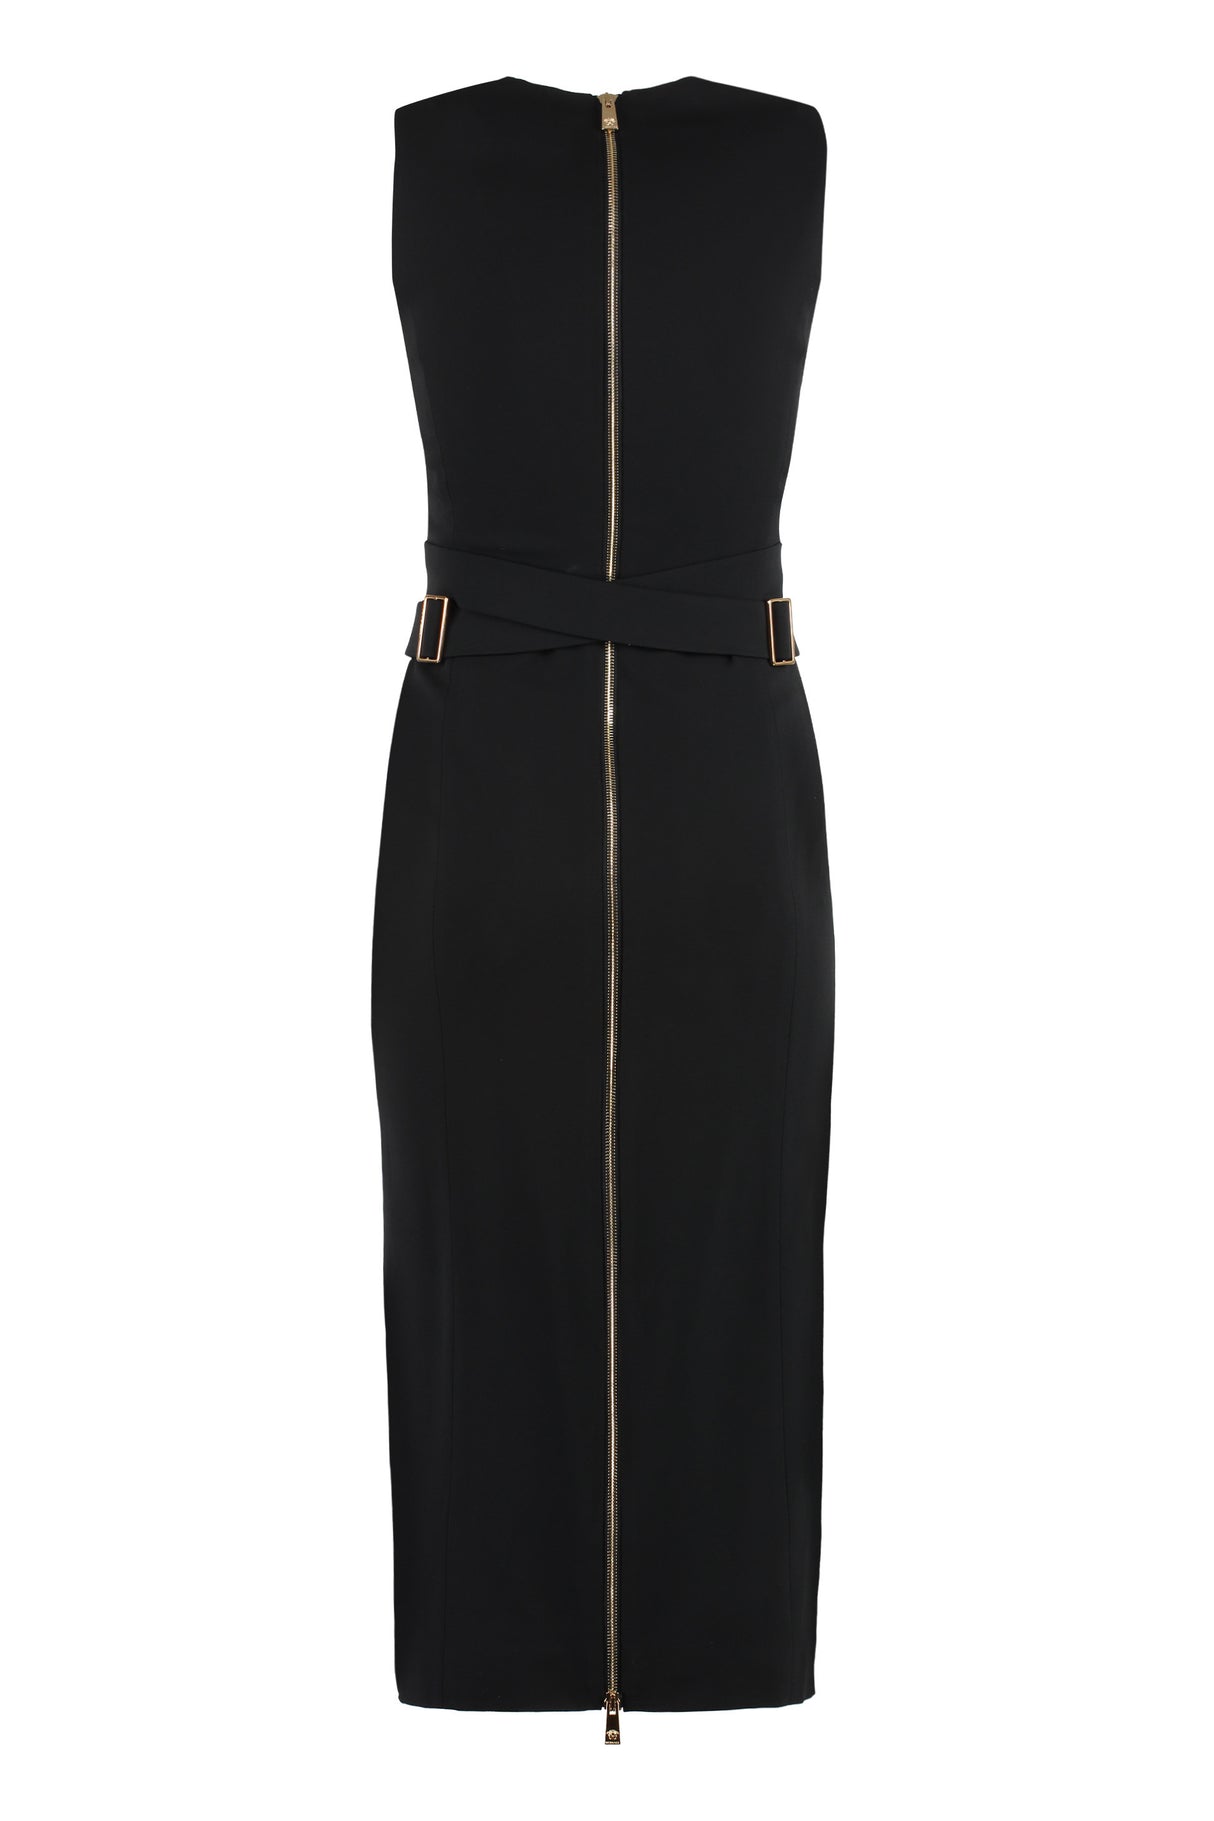 VERSACE Stunning Black Crepe Midi Dress for Women | Adjustable Waist Belt, Medusa Detail